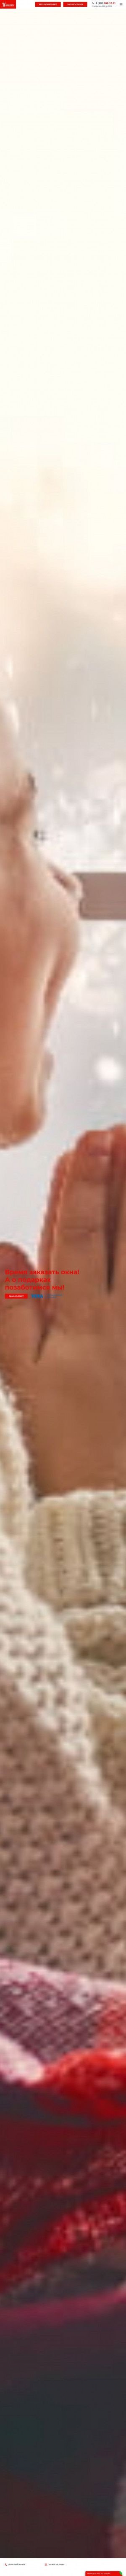 Предпросмотр для www.oknarosta.ru — Окна Роста